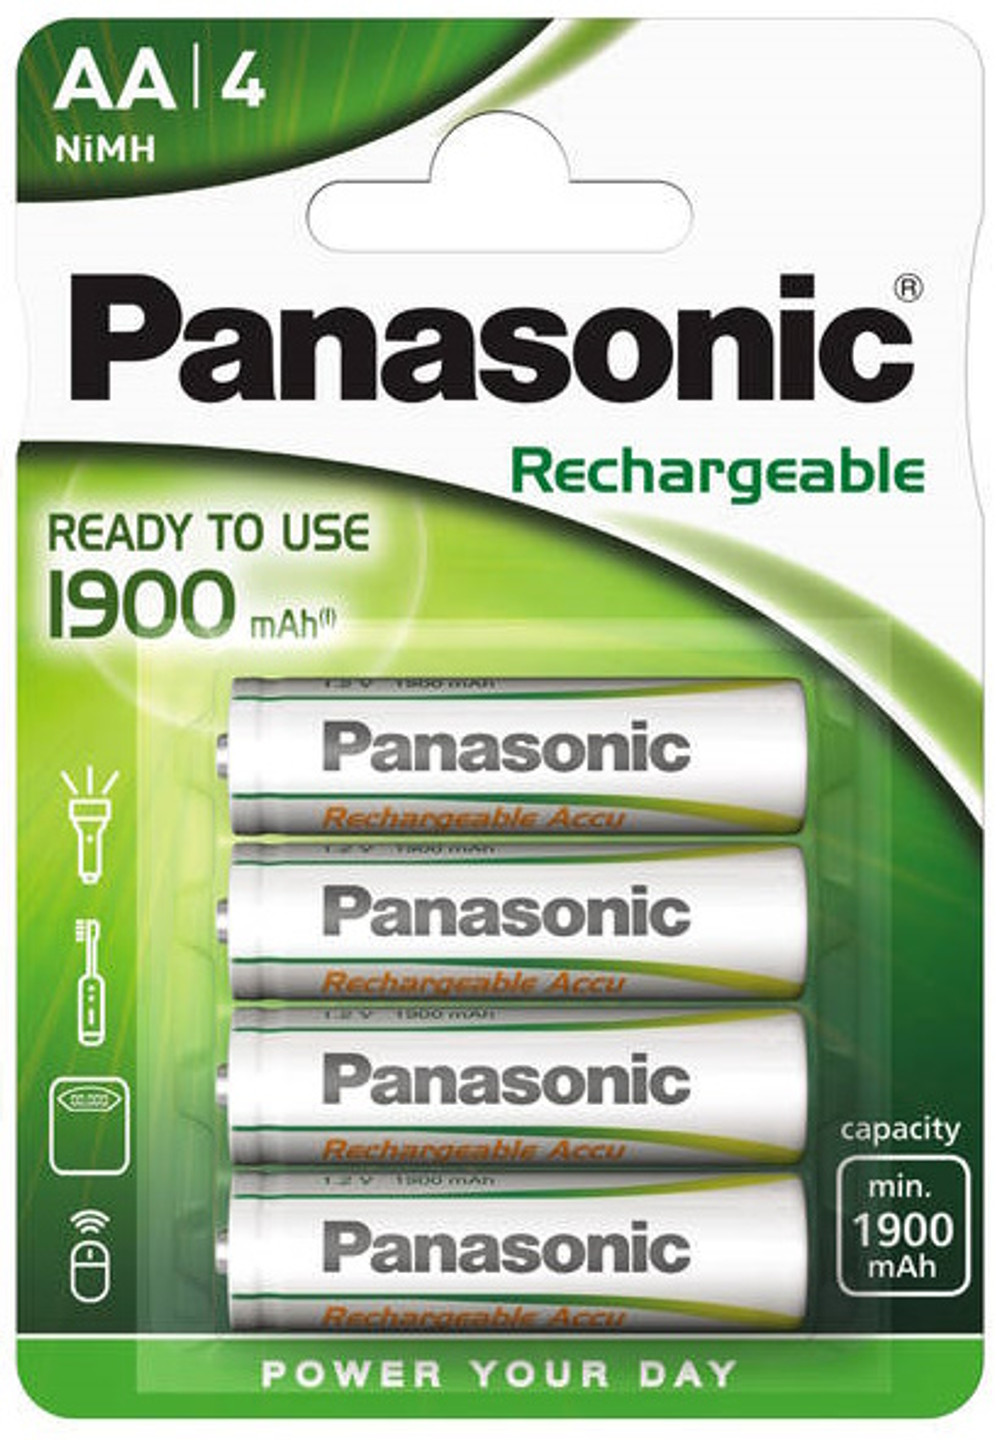 Panasonic AA 1900 mAh NiMH Rechargeable Batteries. 4 Pack